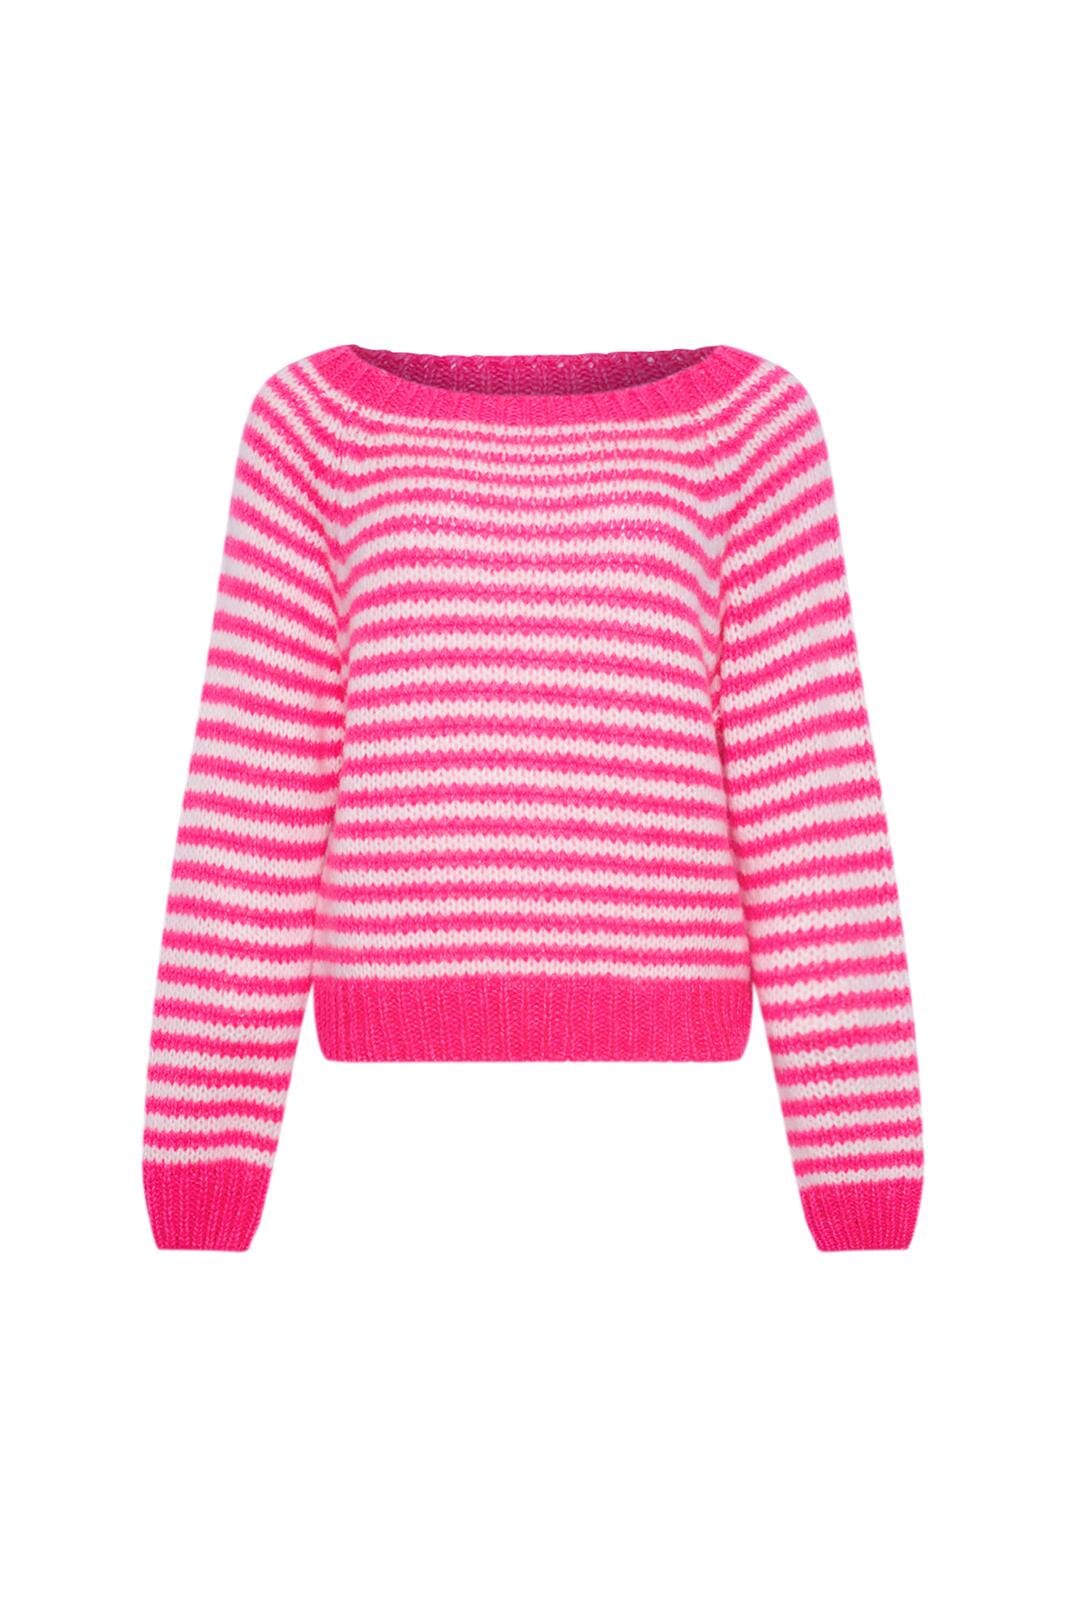 Noella - Jovie Knit - 1028 Pink Sugar Stripe